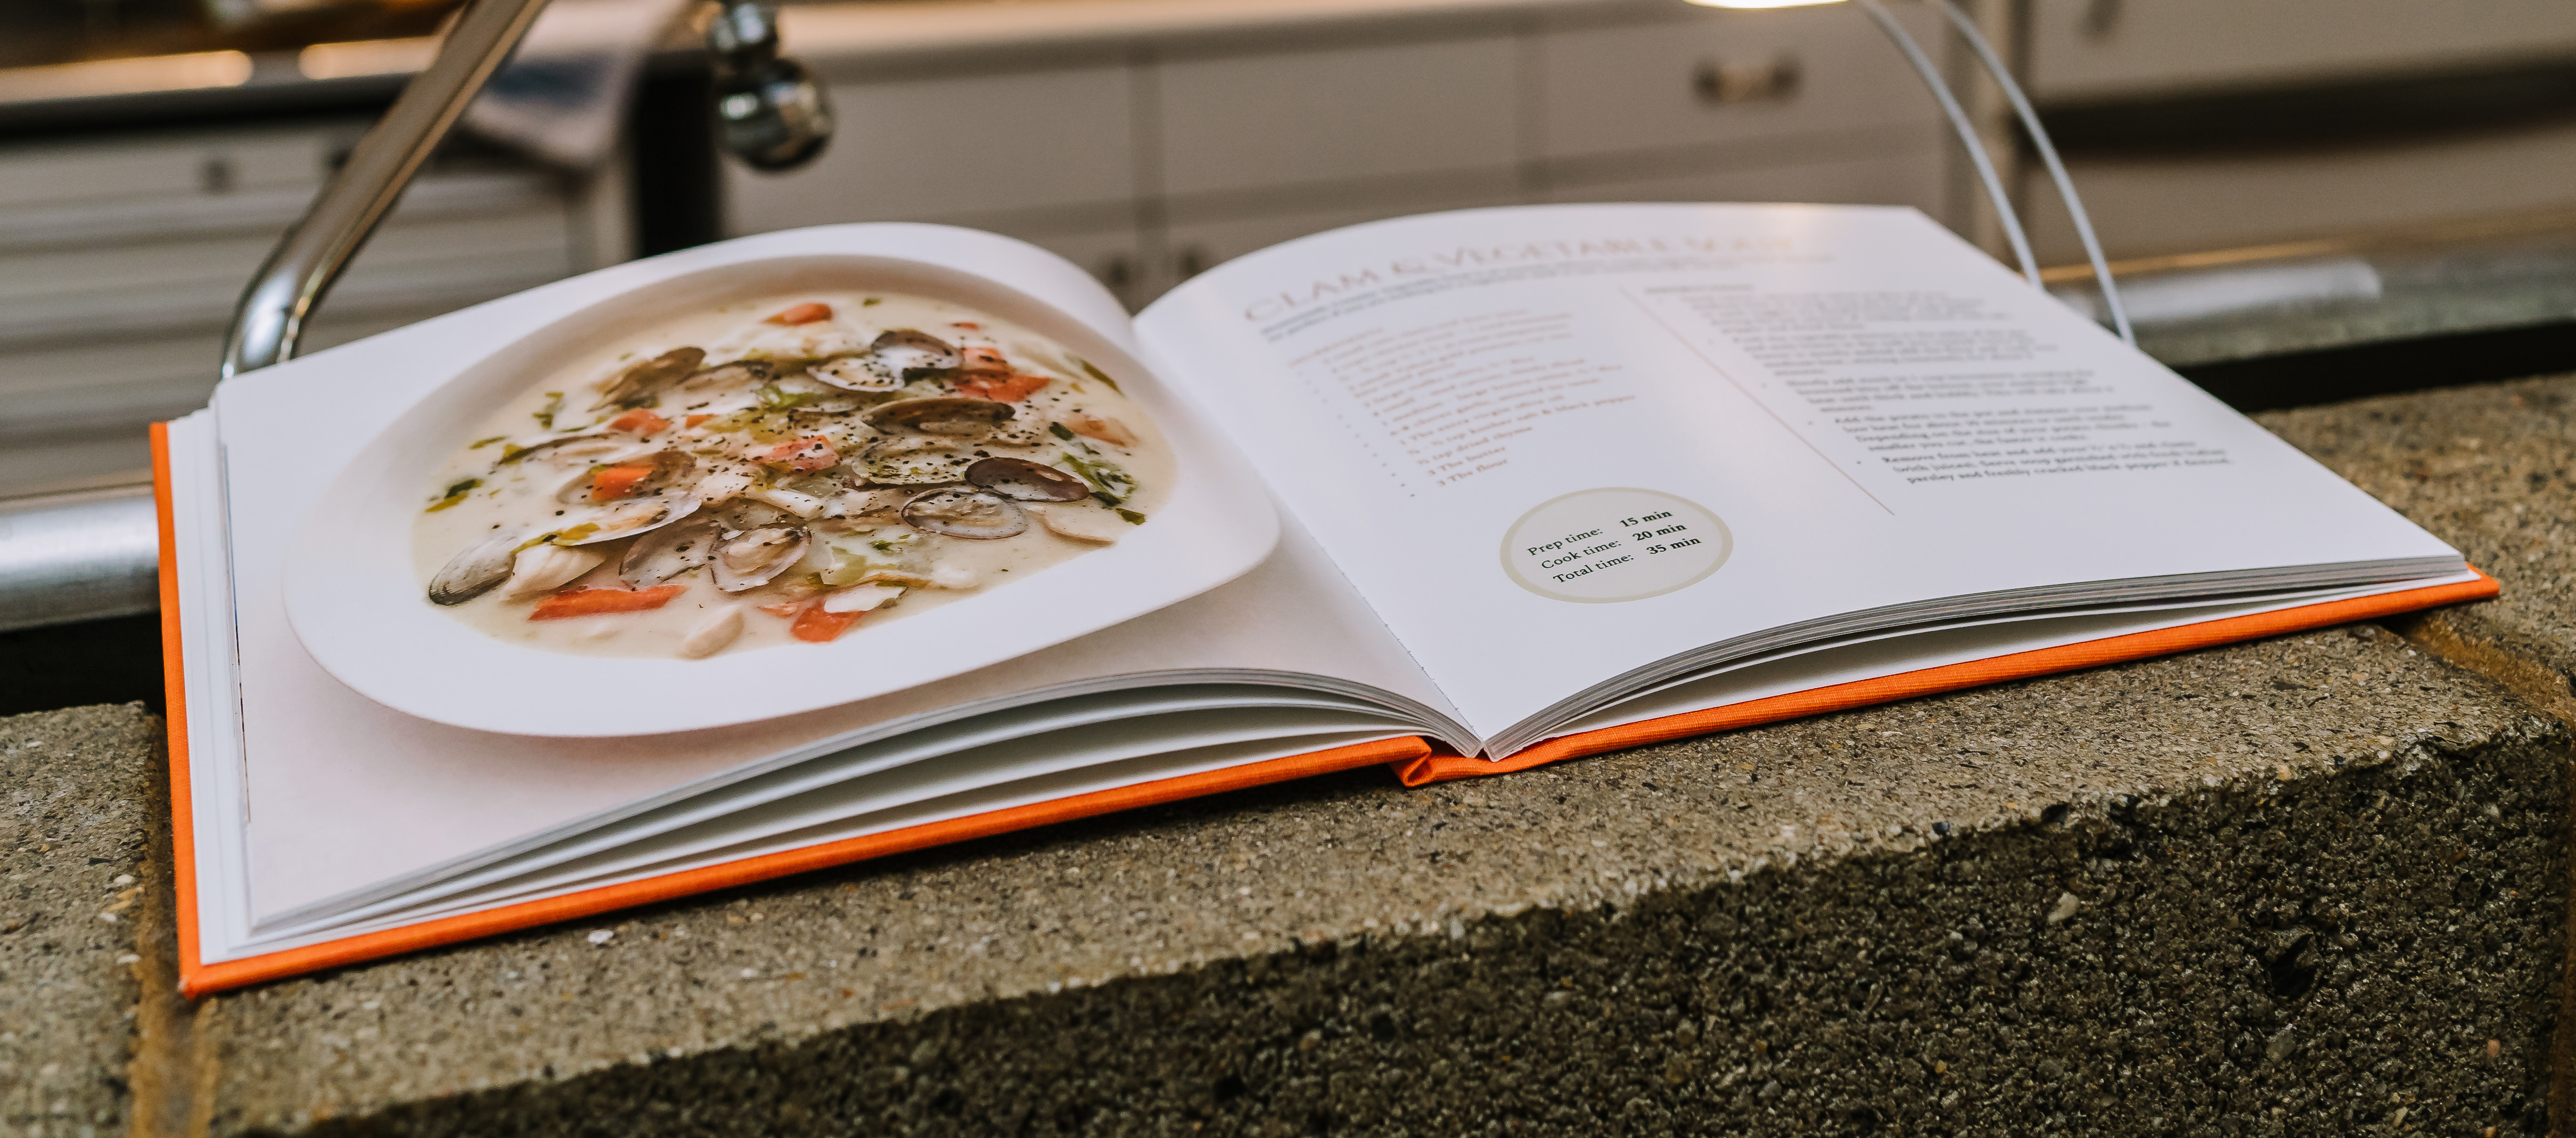 Make your own Cookbook, DIY Recipe Books